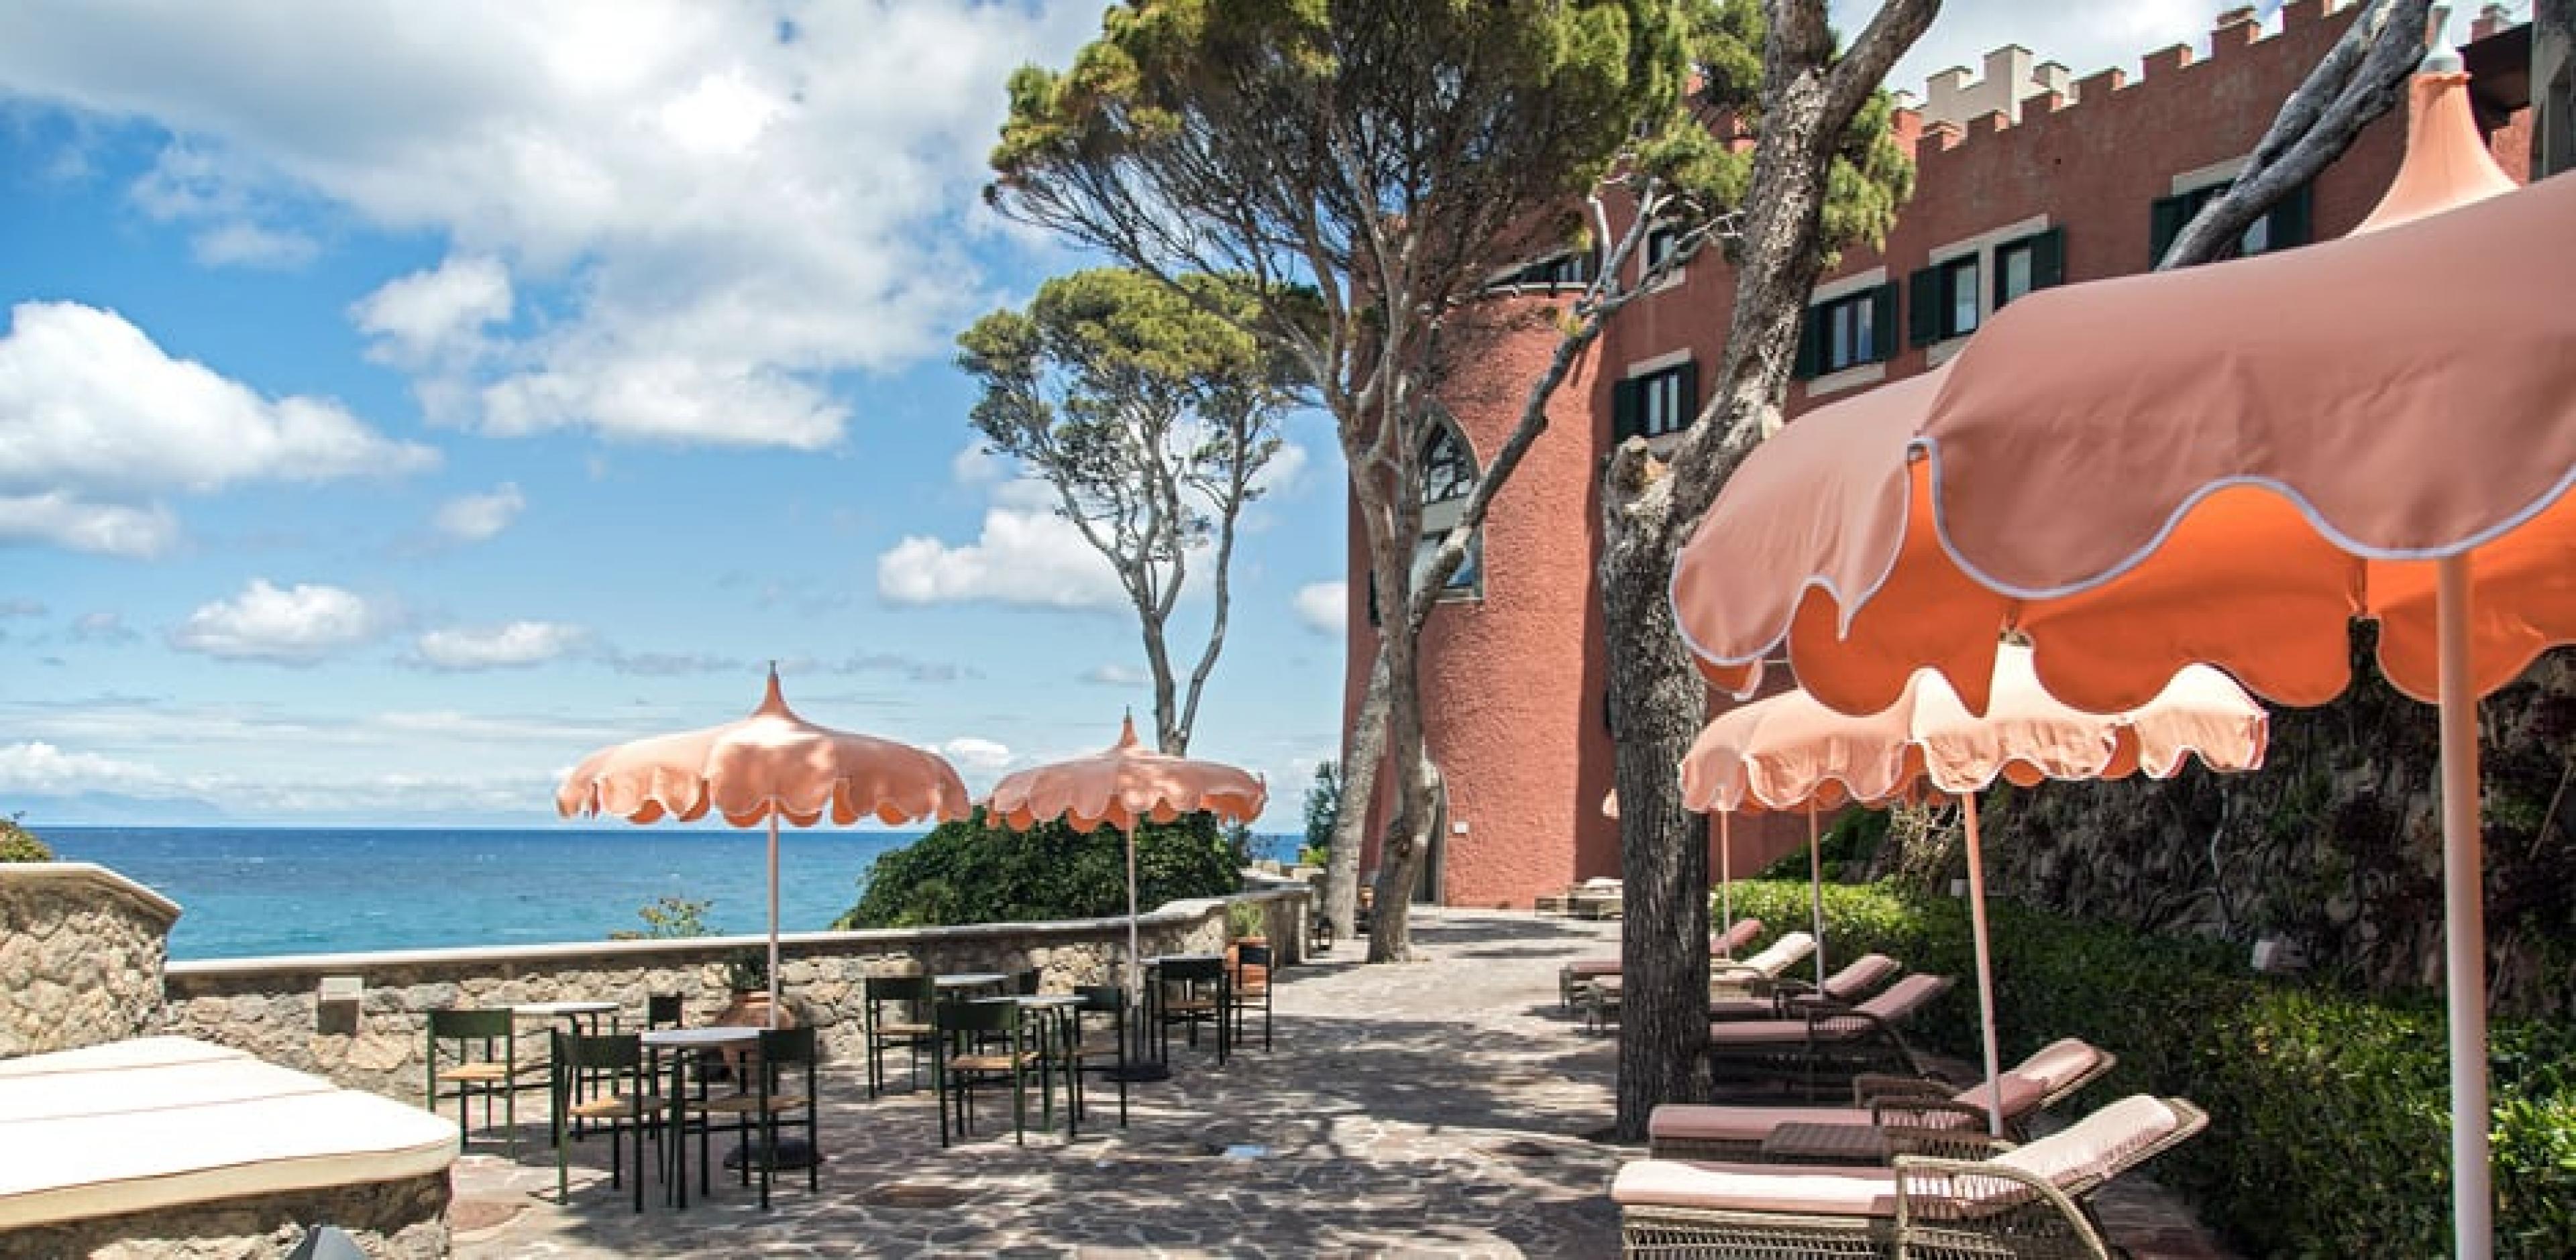 Mezzatorre Hotel & Thermal Spa in Ischia, Italy